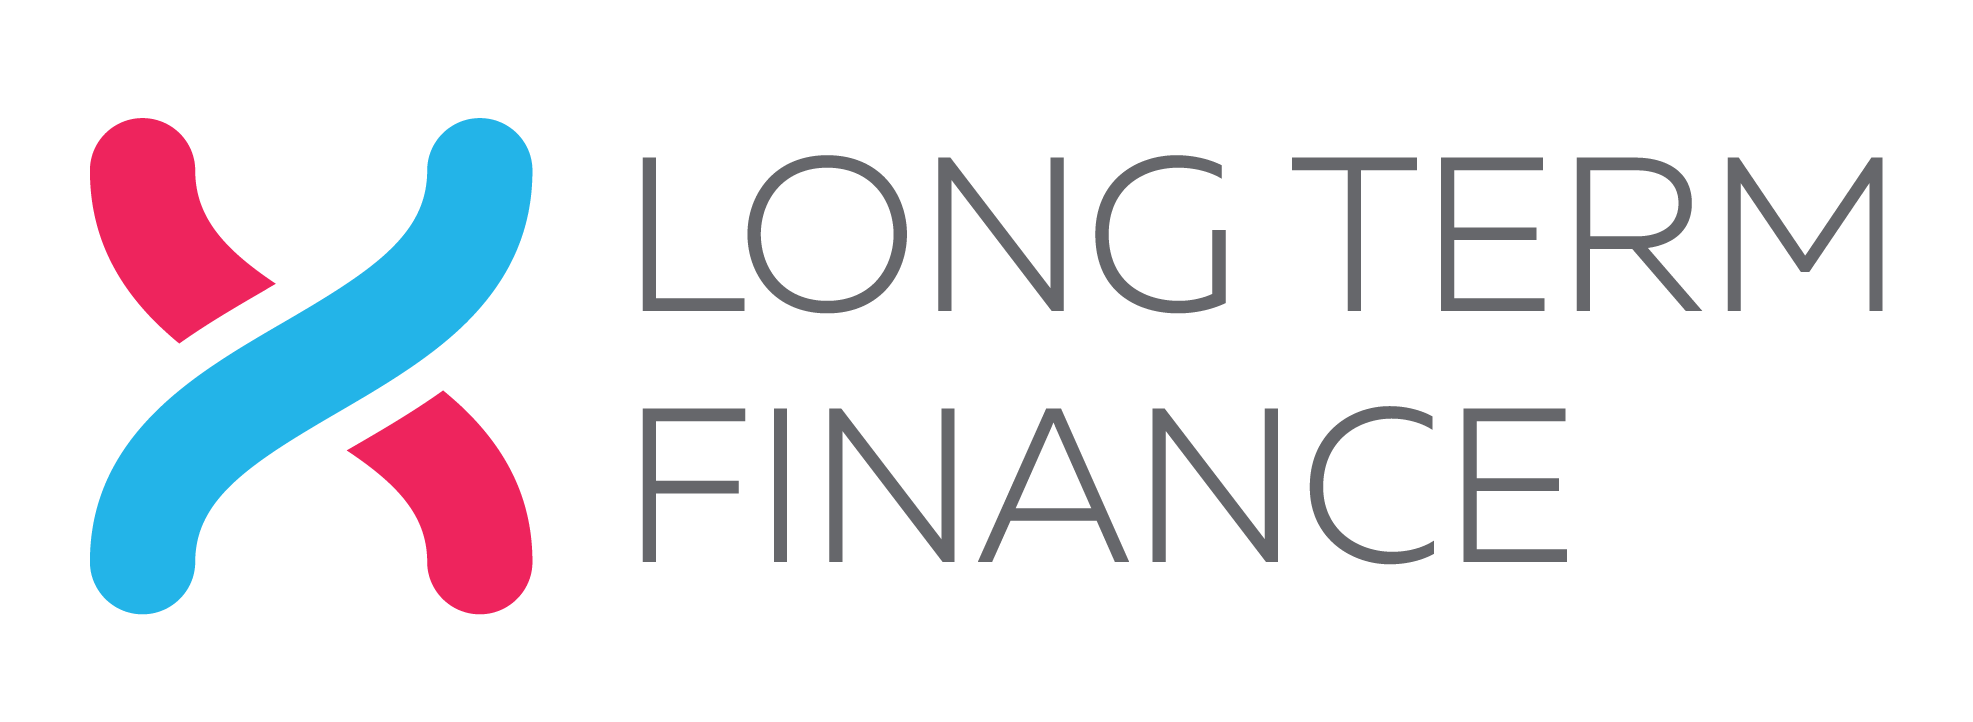 Long term finance.png